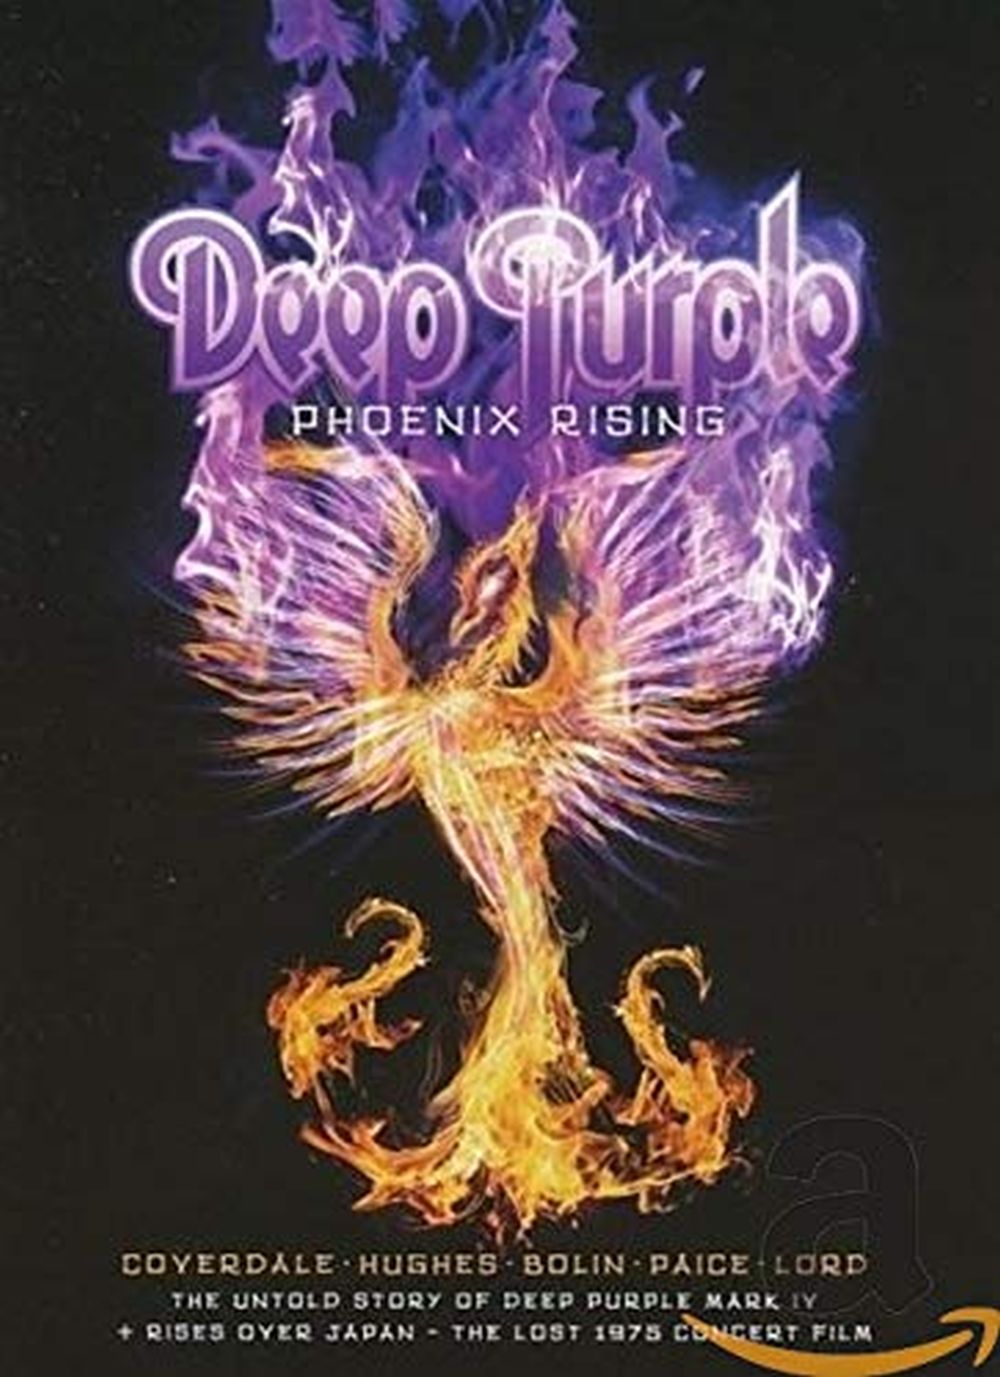 Deep Purple - Phoenix Rising (R2) - DVD/CD - Music